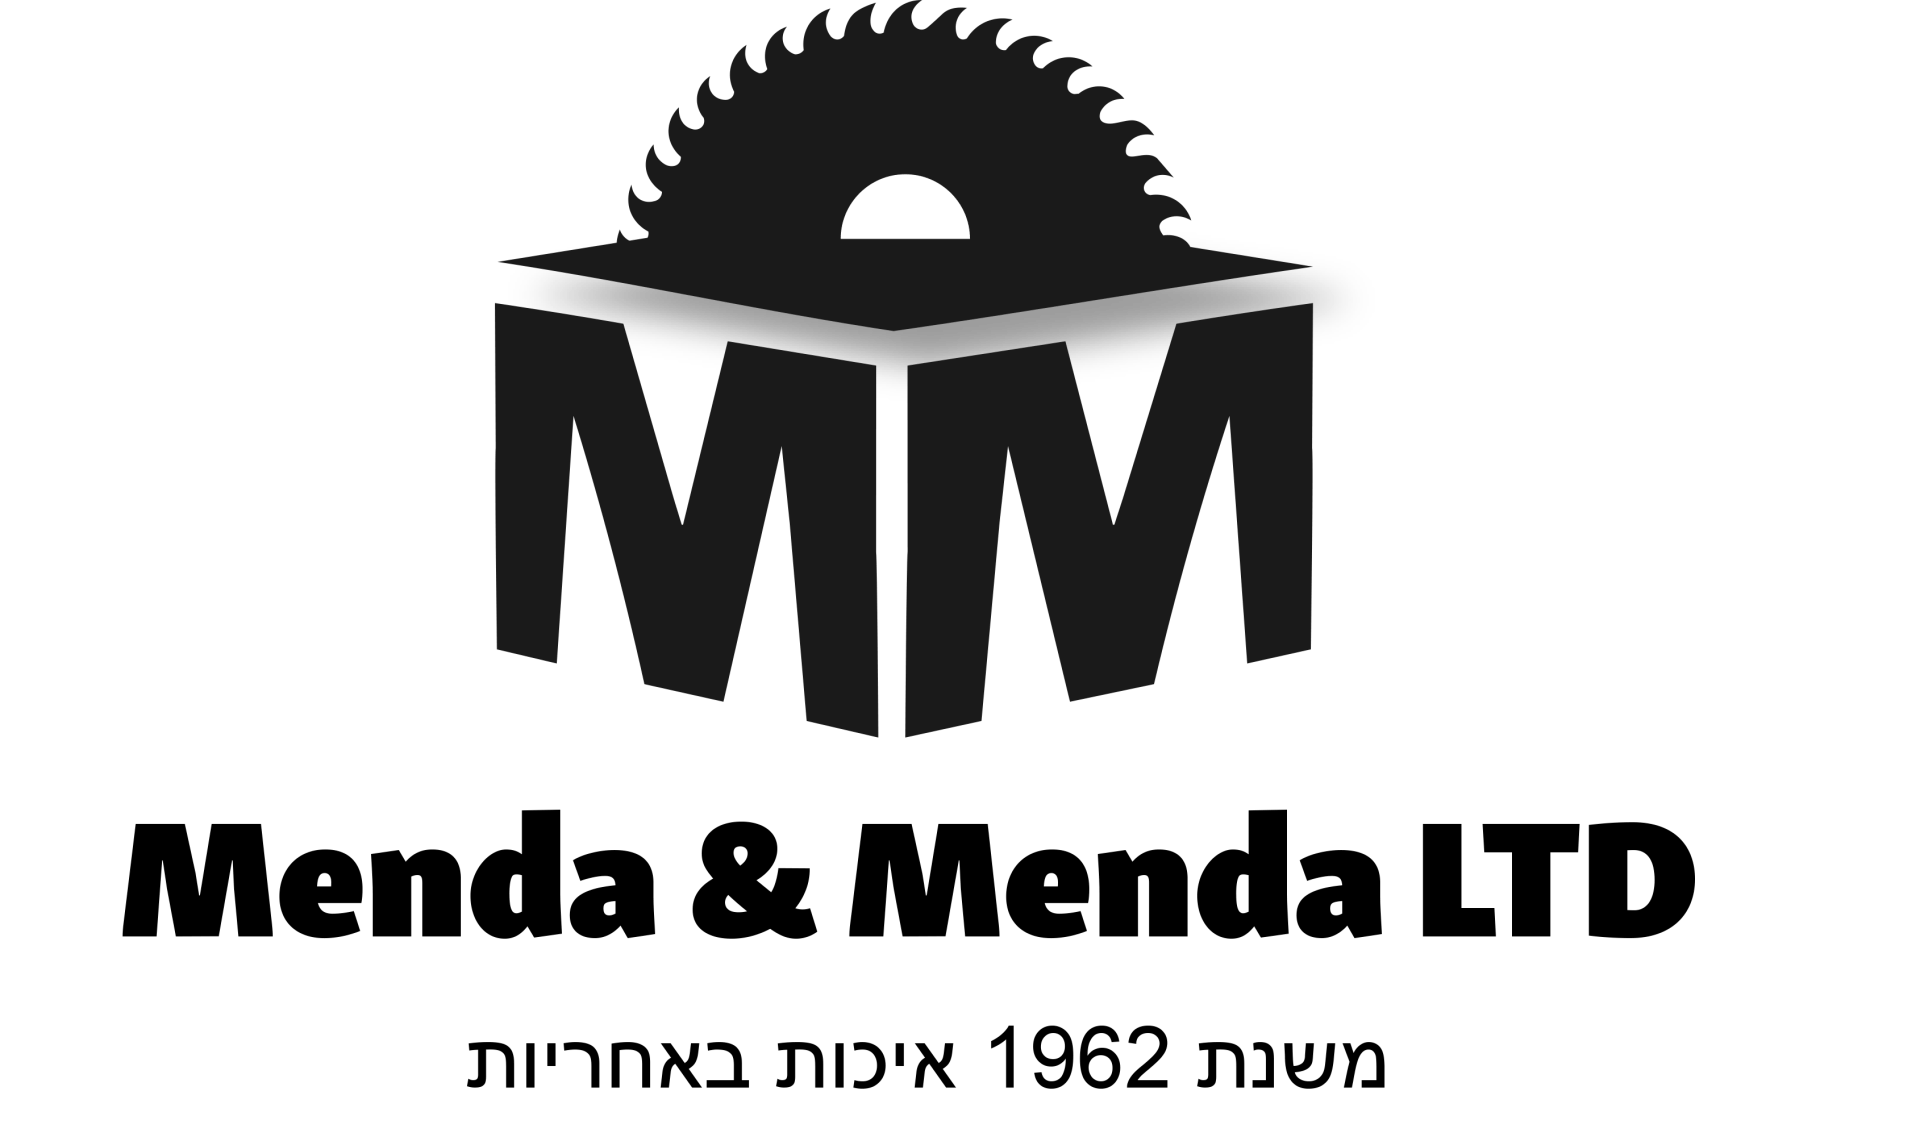 menda & menda LTD